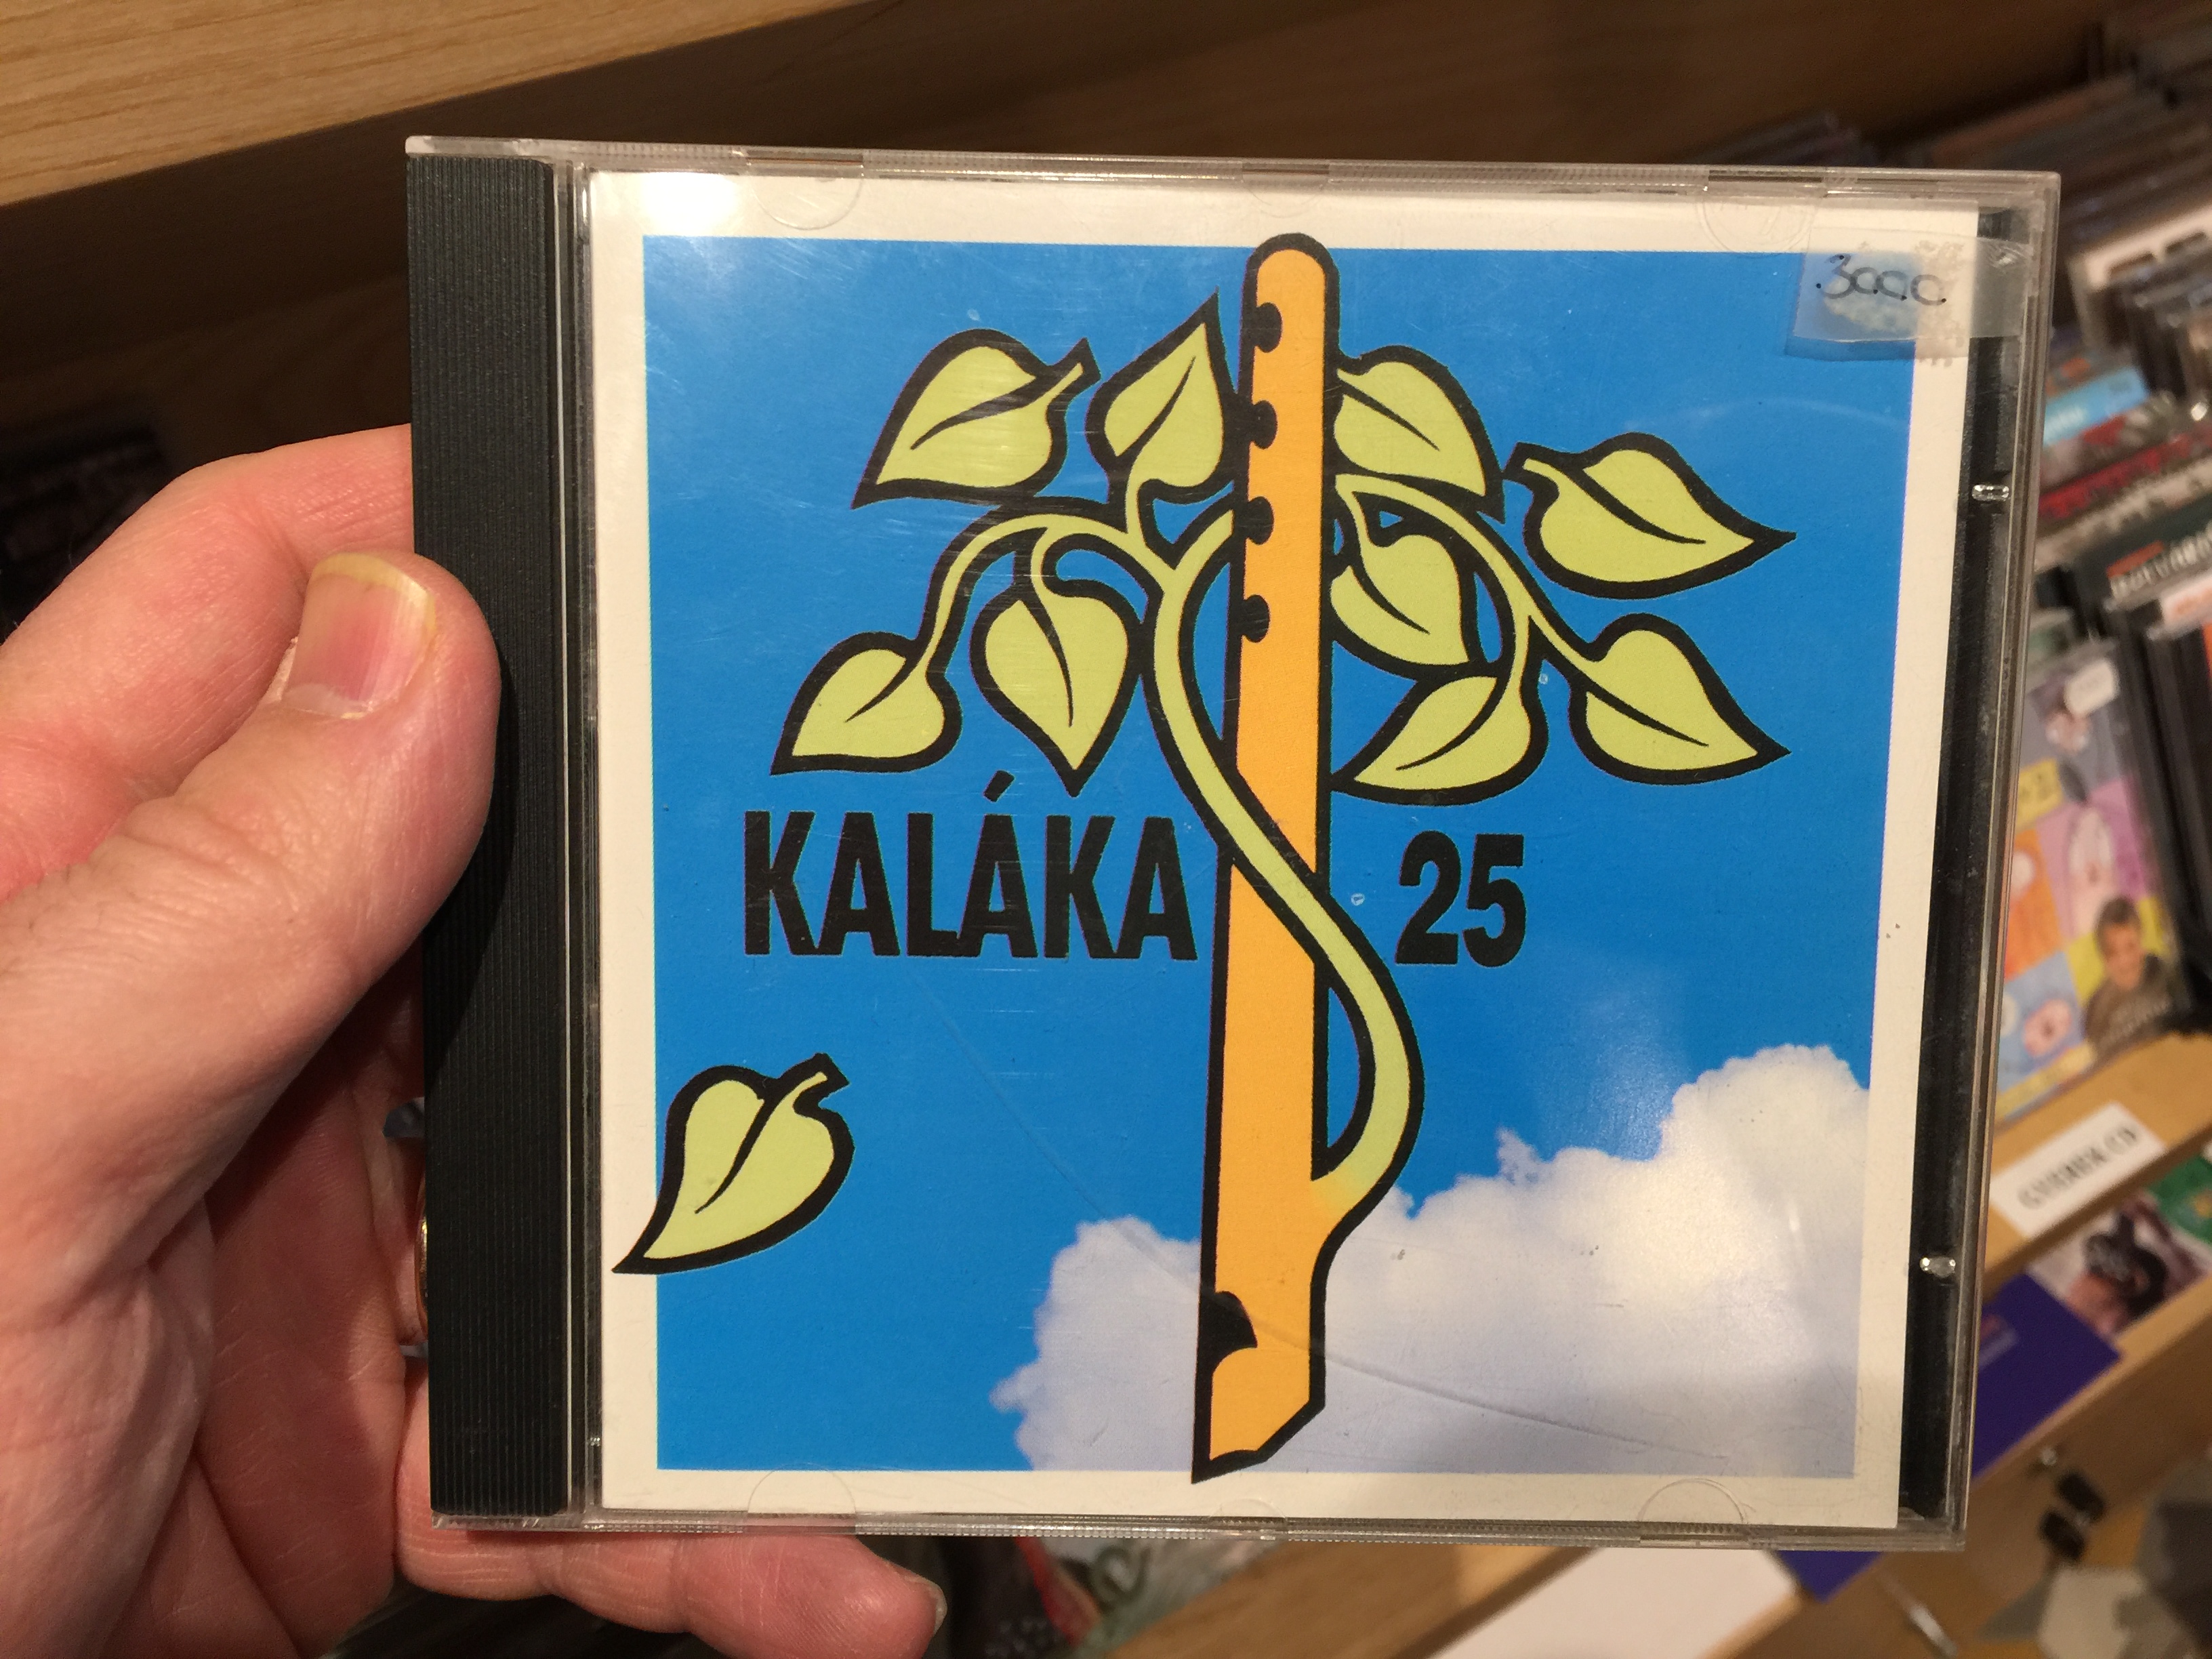 kal-ka-kal-ka-25-gryllus-audio-cd-1994-gcd-001-1-.jpg